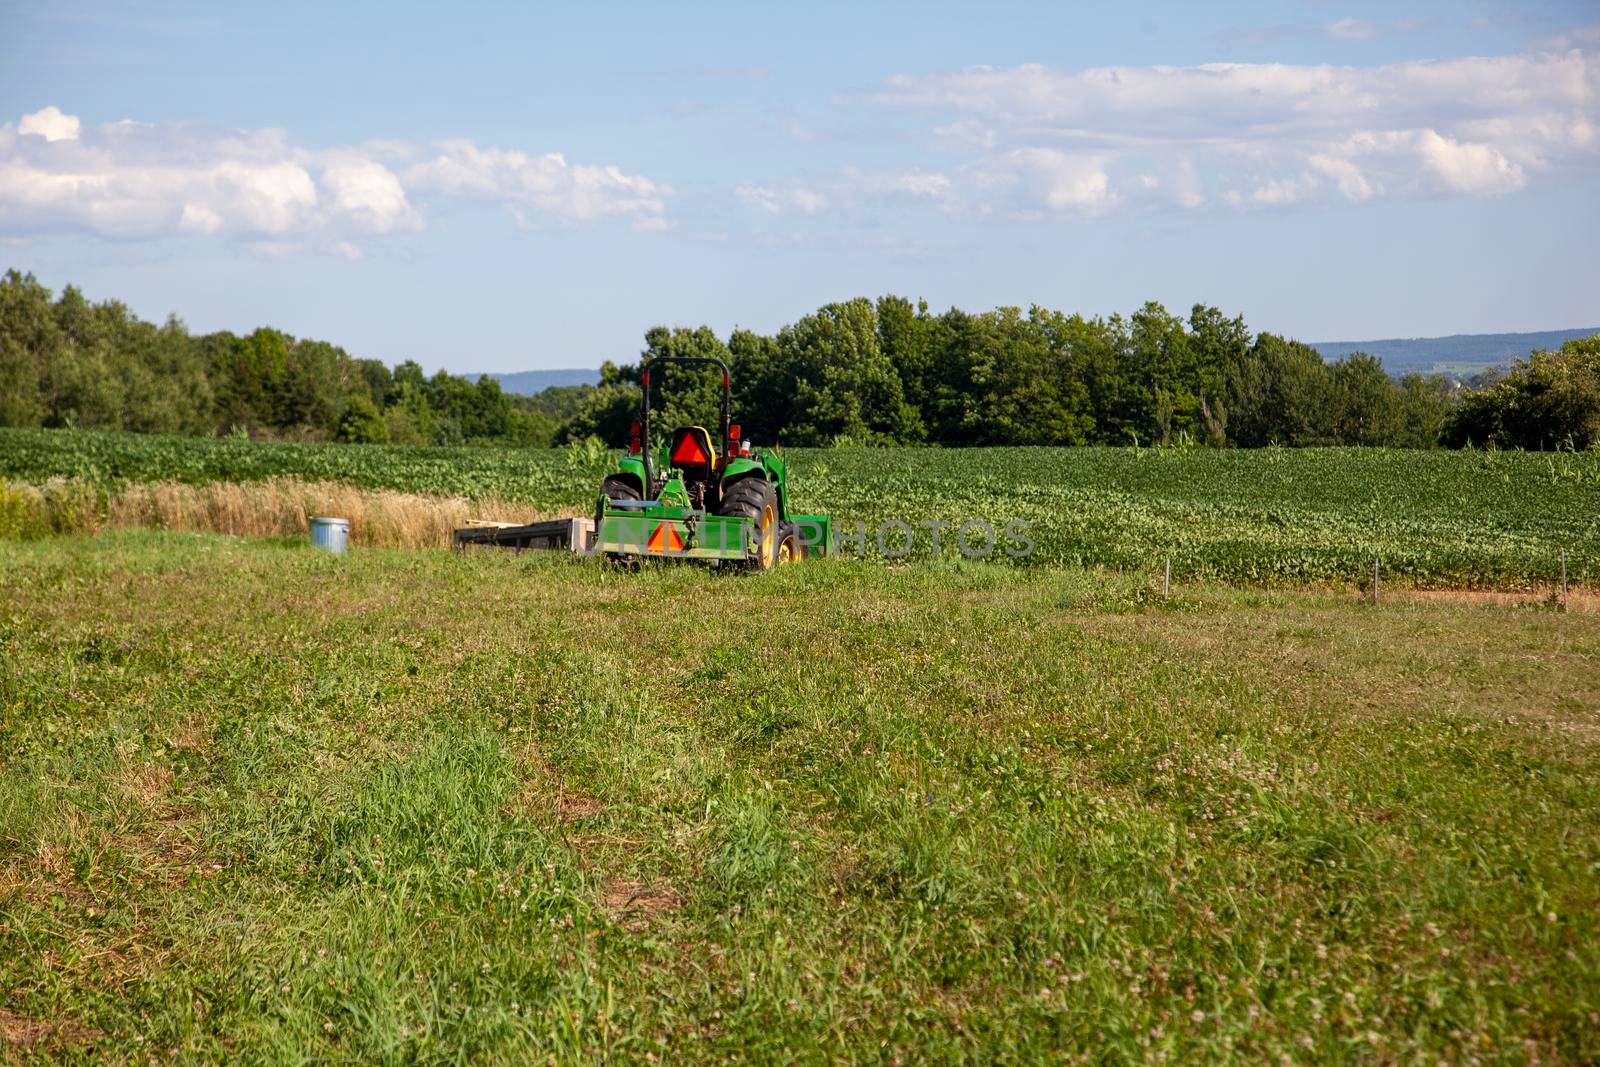  tractor on a farm in field  by rustycanuck